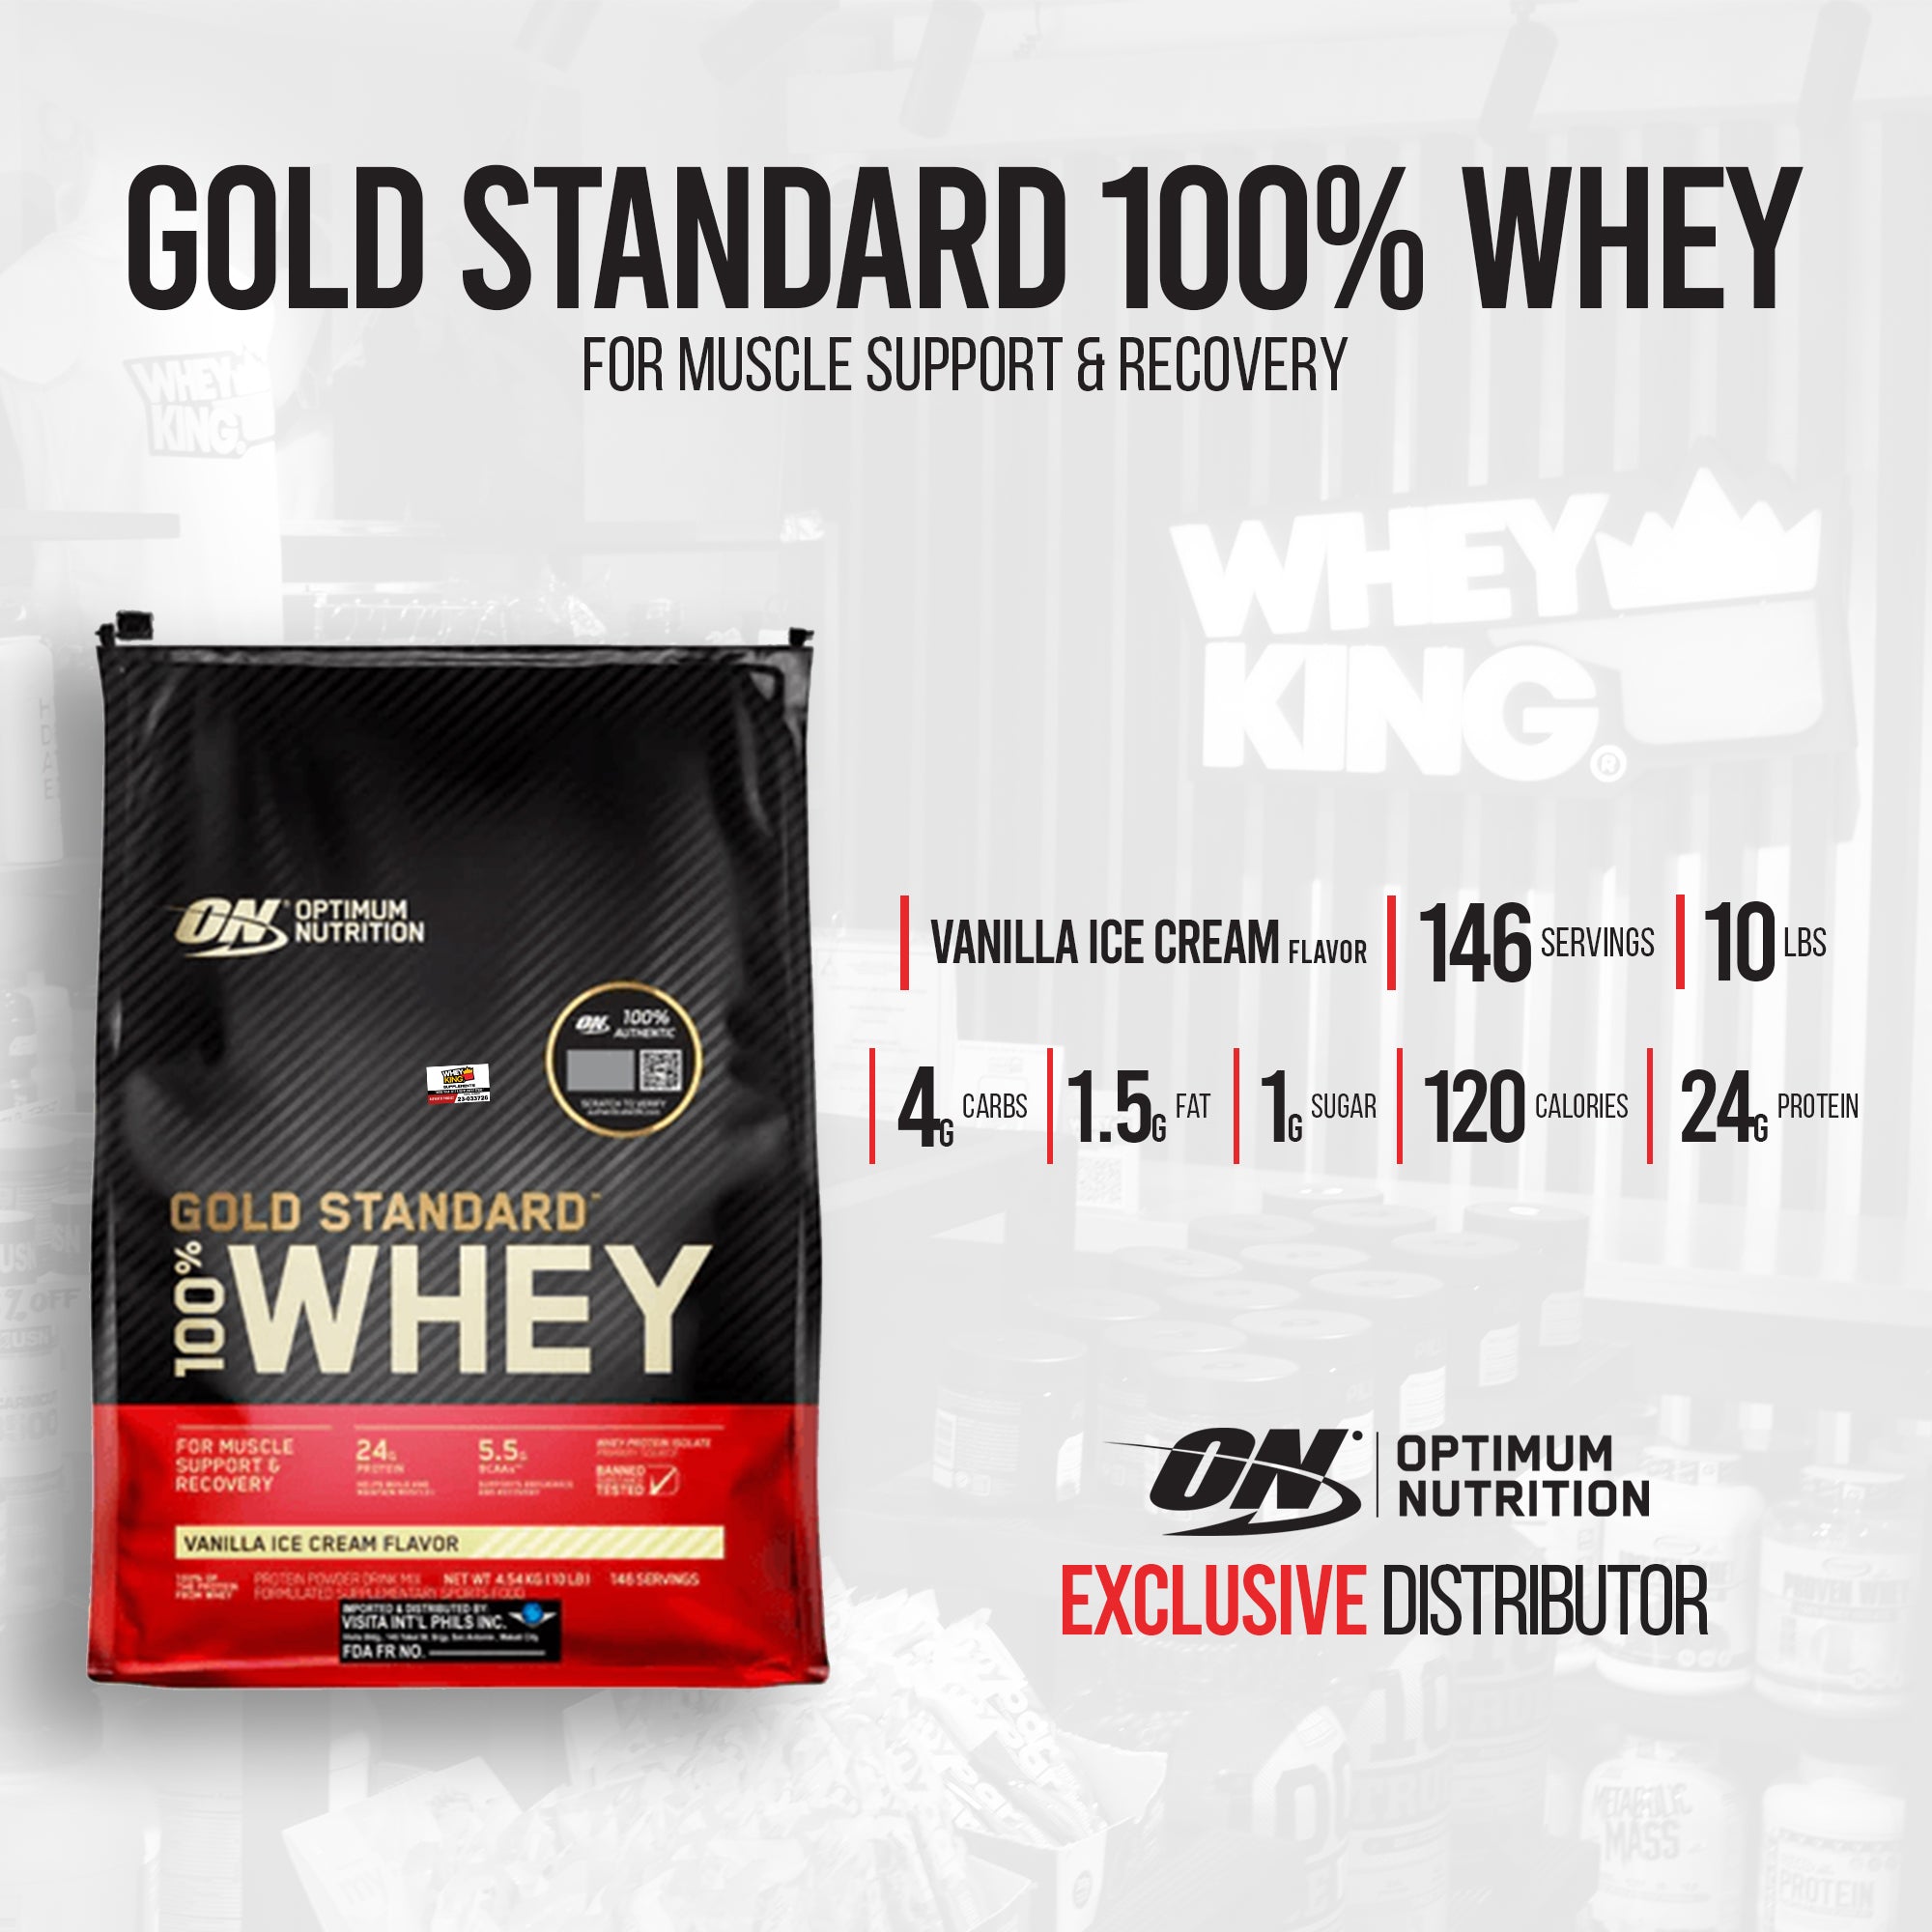 ON Optimum Nutrition Gold Standard Whey - 10lbs